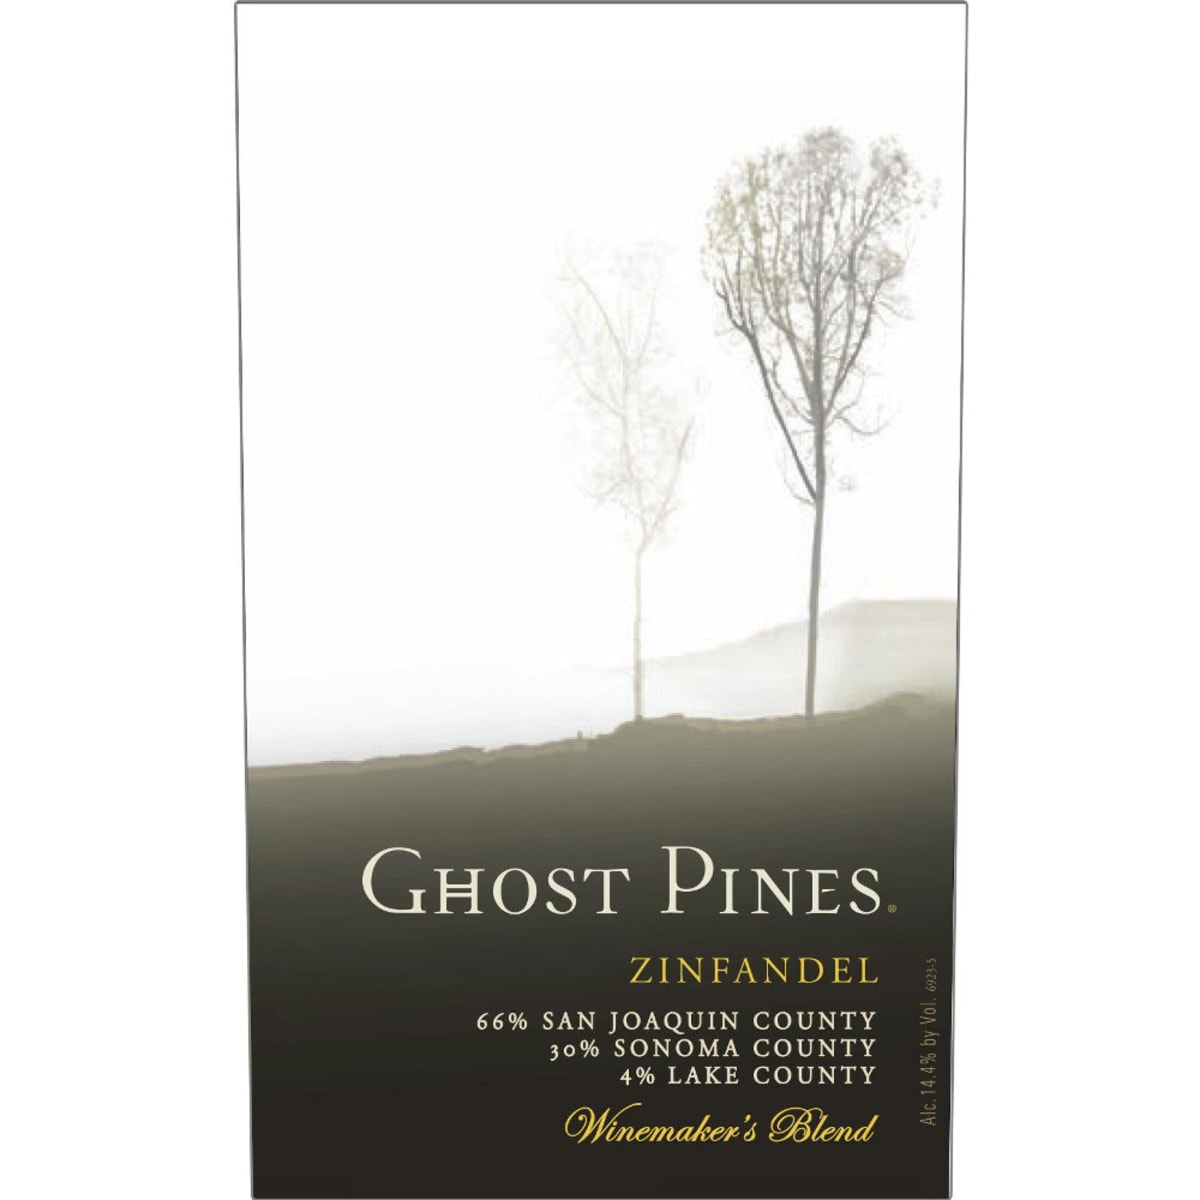 2014 Ghost Pines Zinfandel Joaquin Sonoma Lake - click image for full description